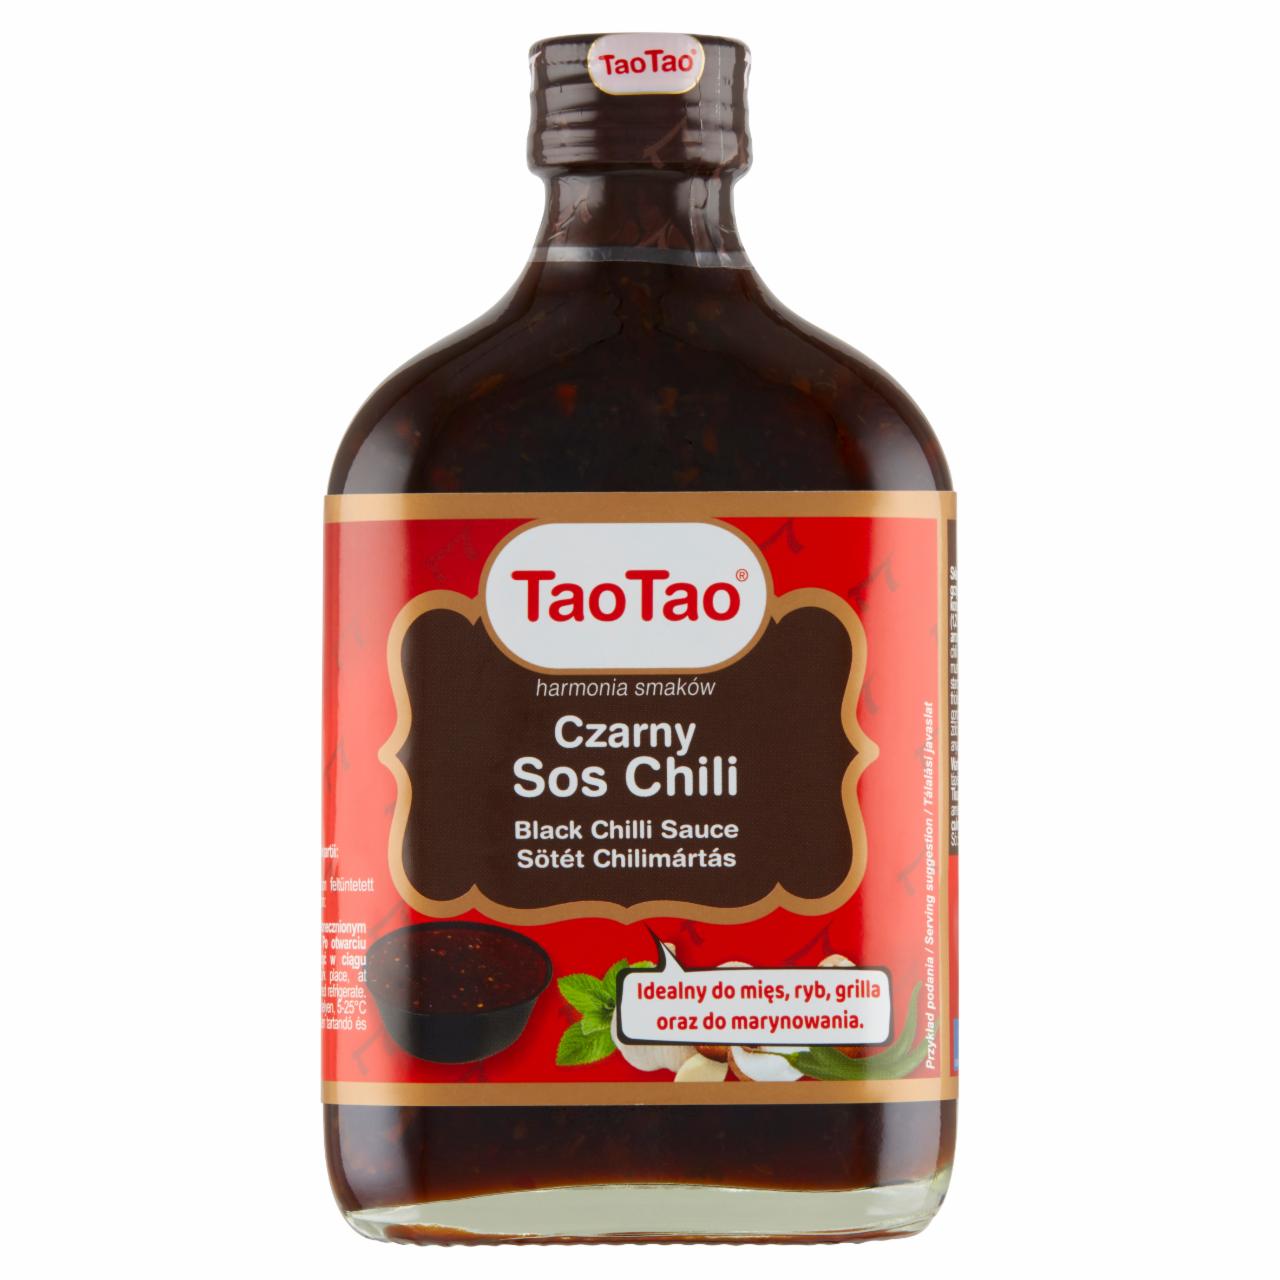 Zdjęcia - Tao Tao Czarny sos chili 175 ml